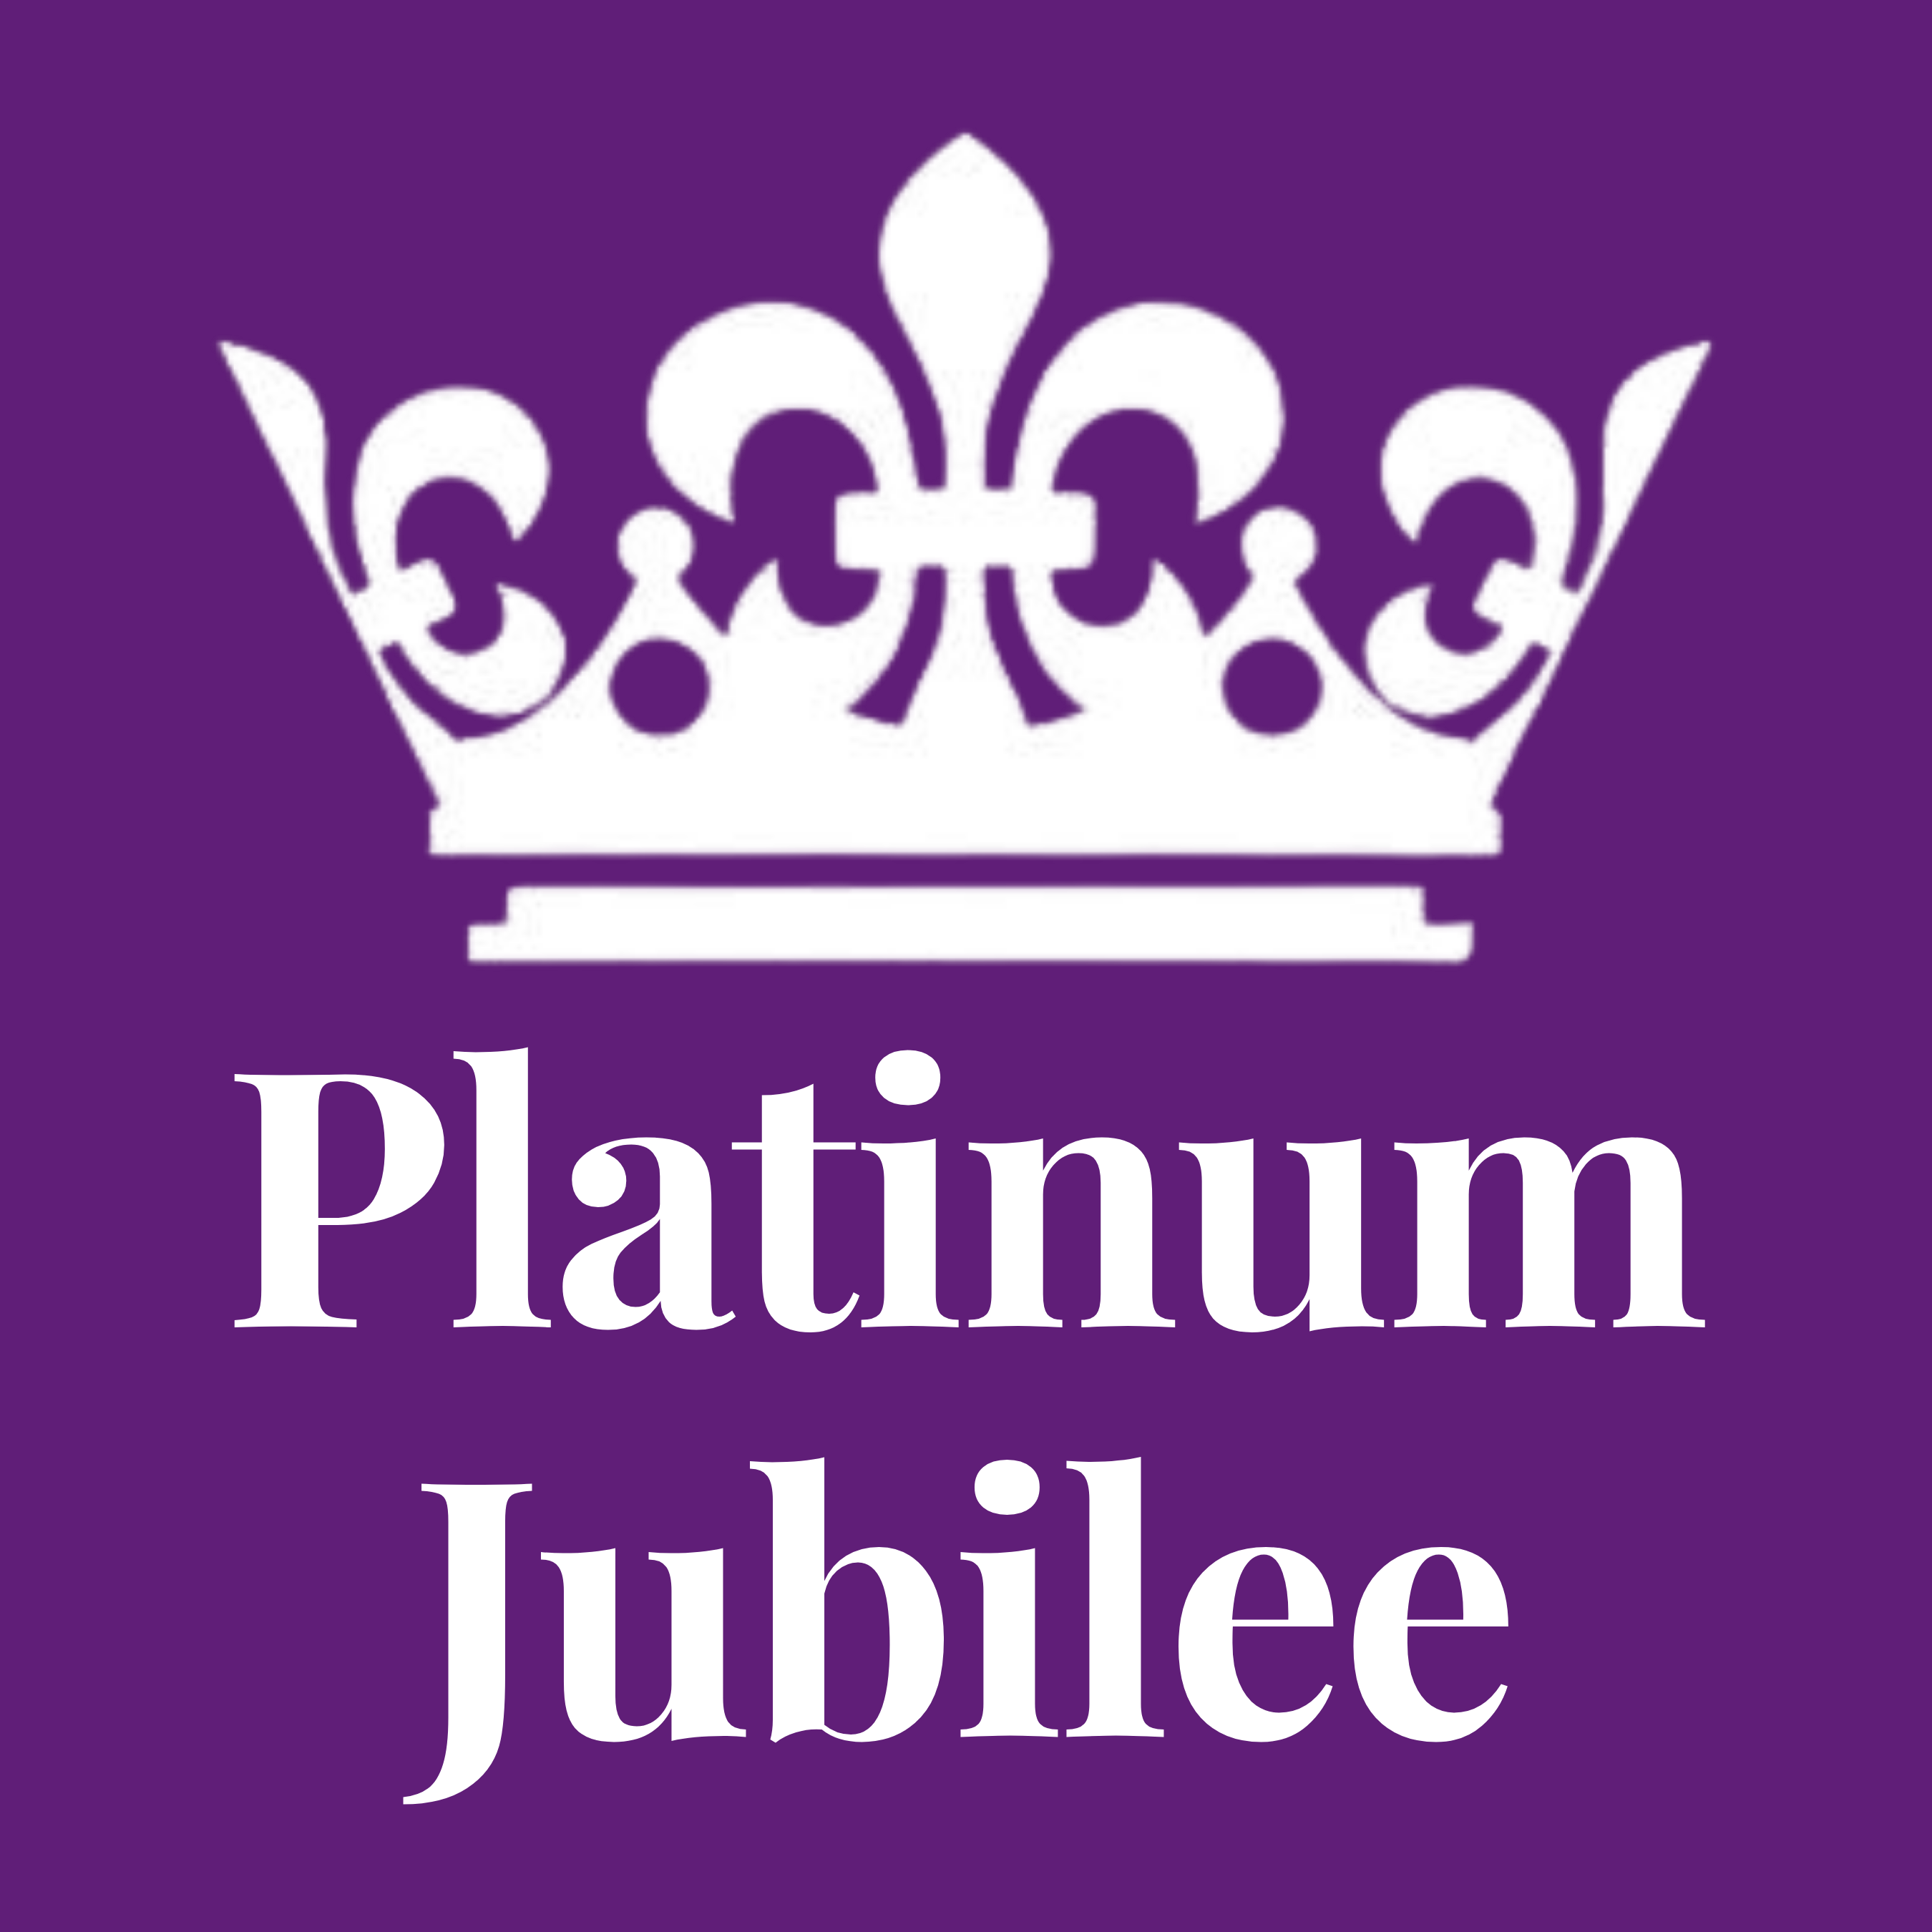 A new statue of Elizabeth II planned for Platinum Jubilee Platinum